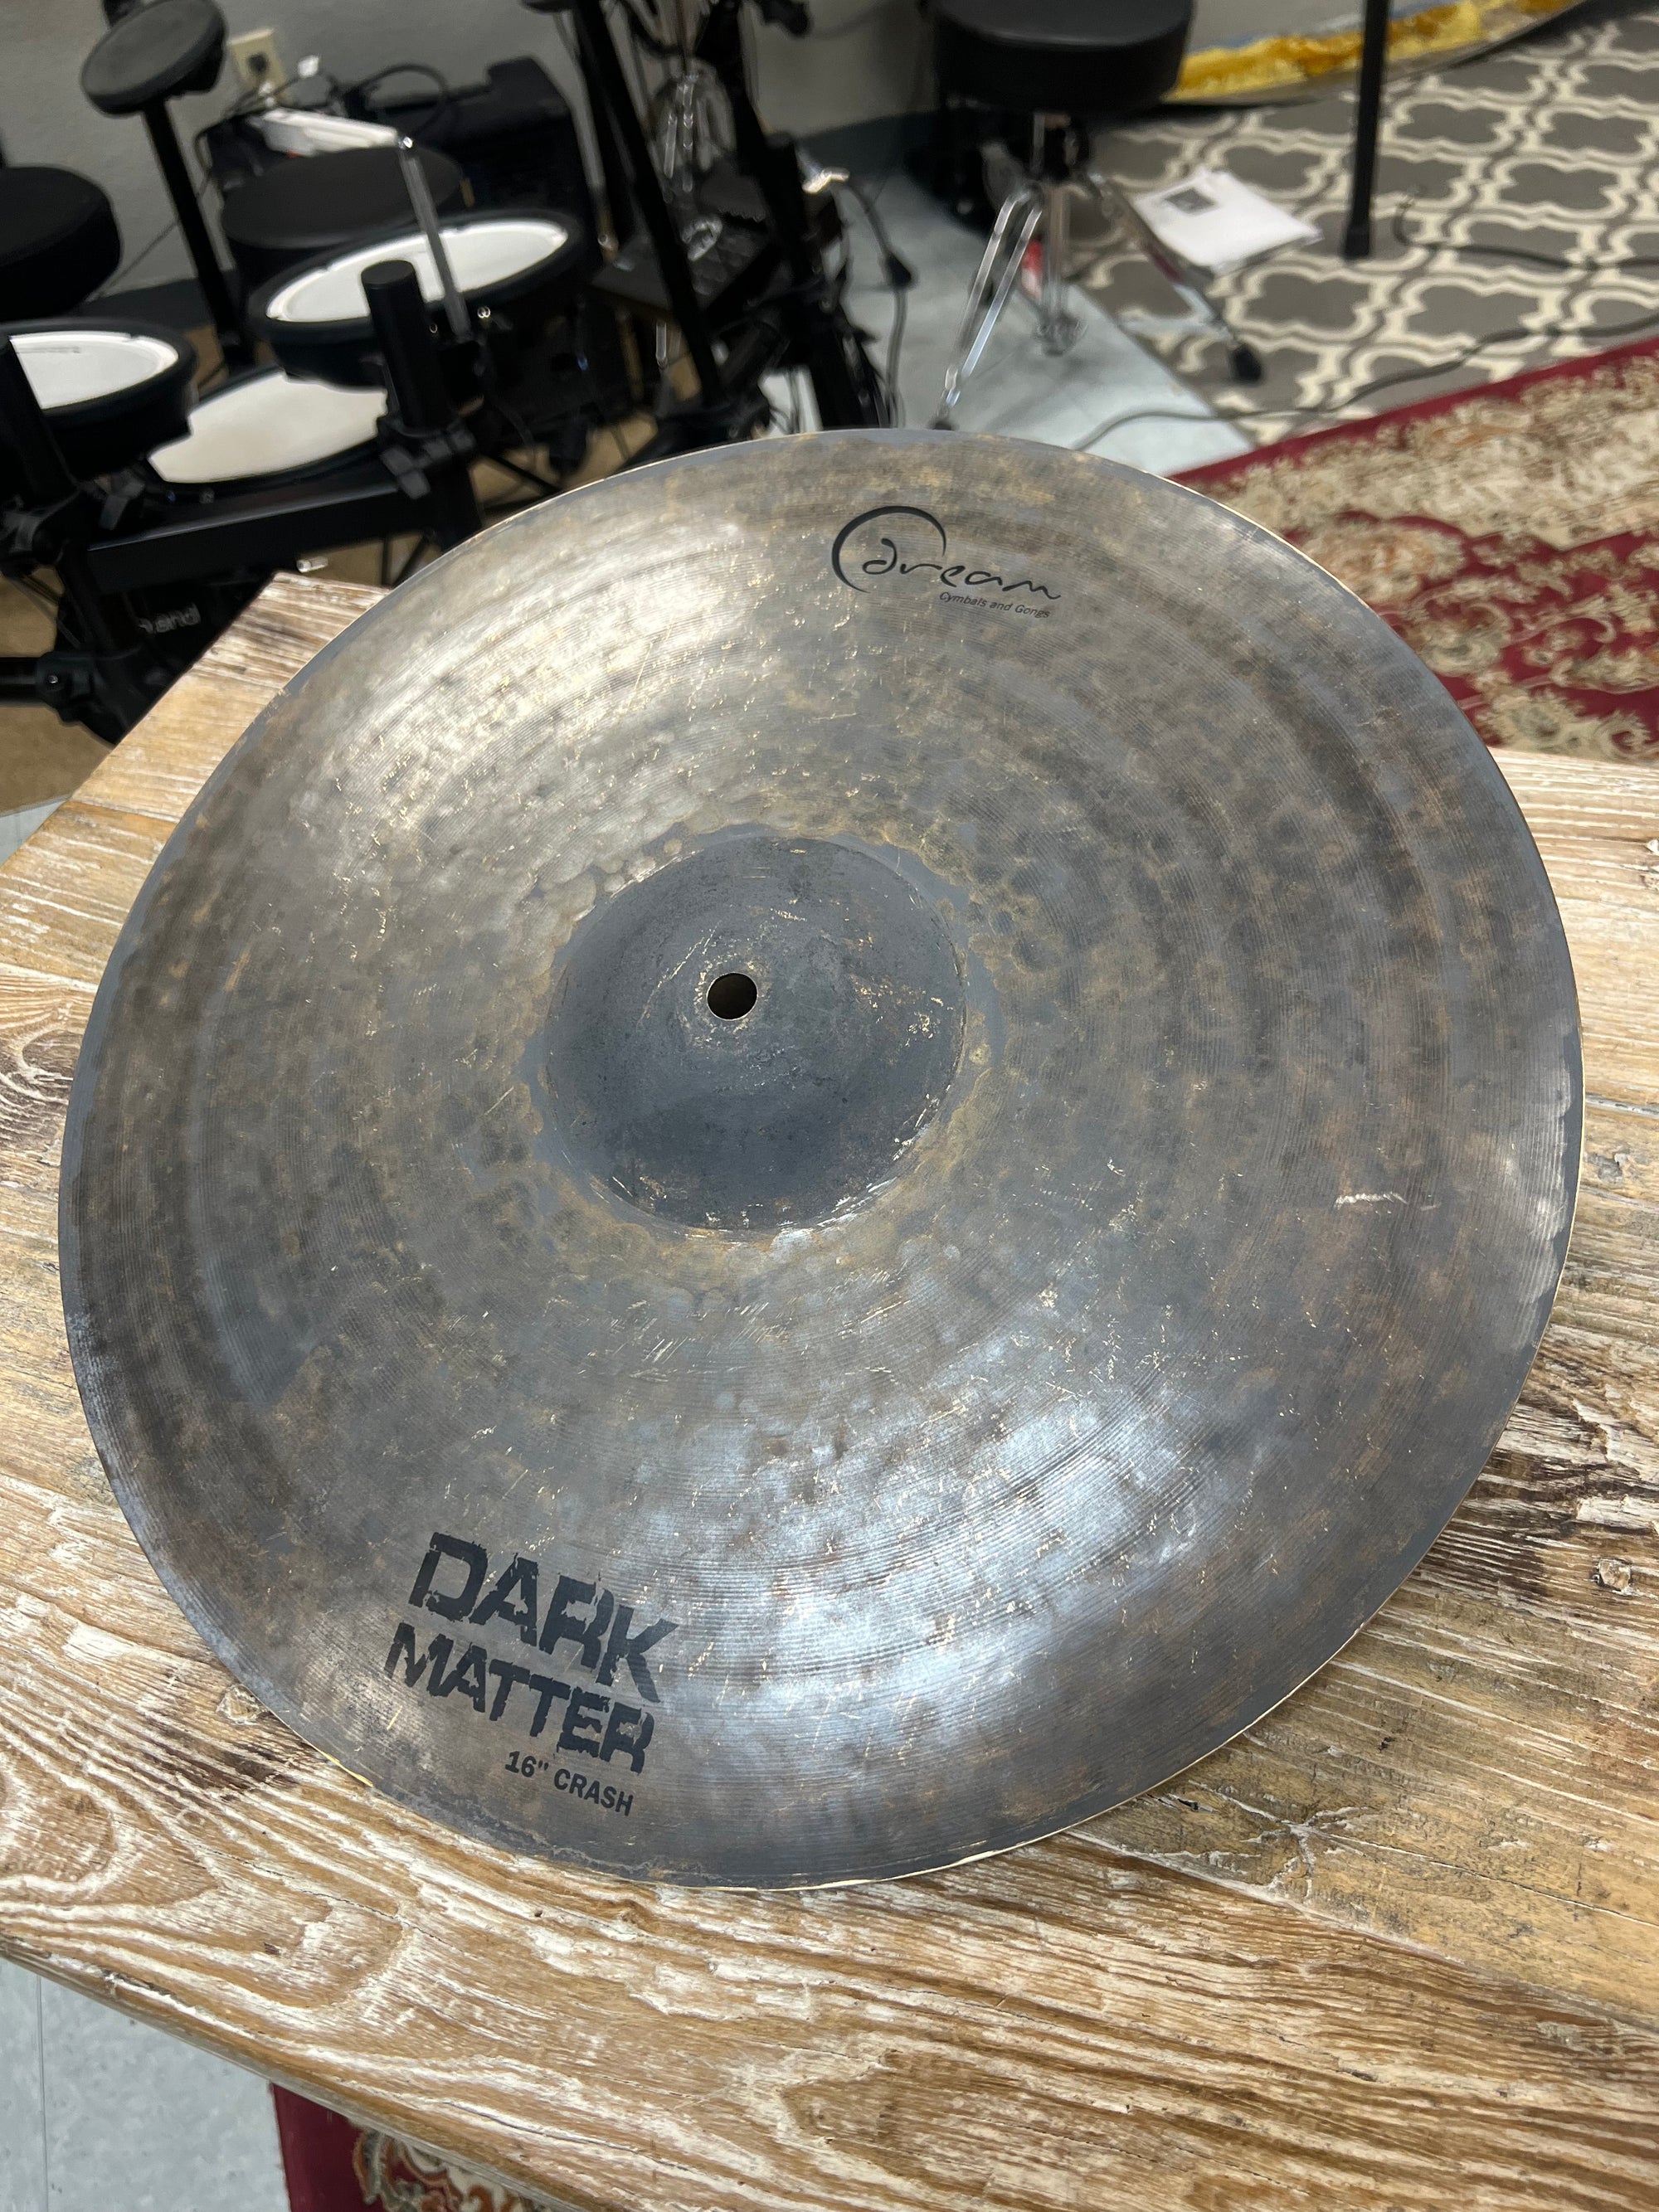 Dream 16” Dark Matter Energy Crash cymbal